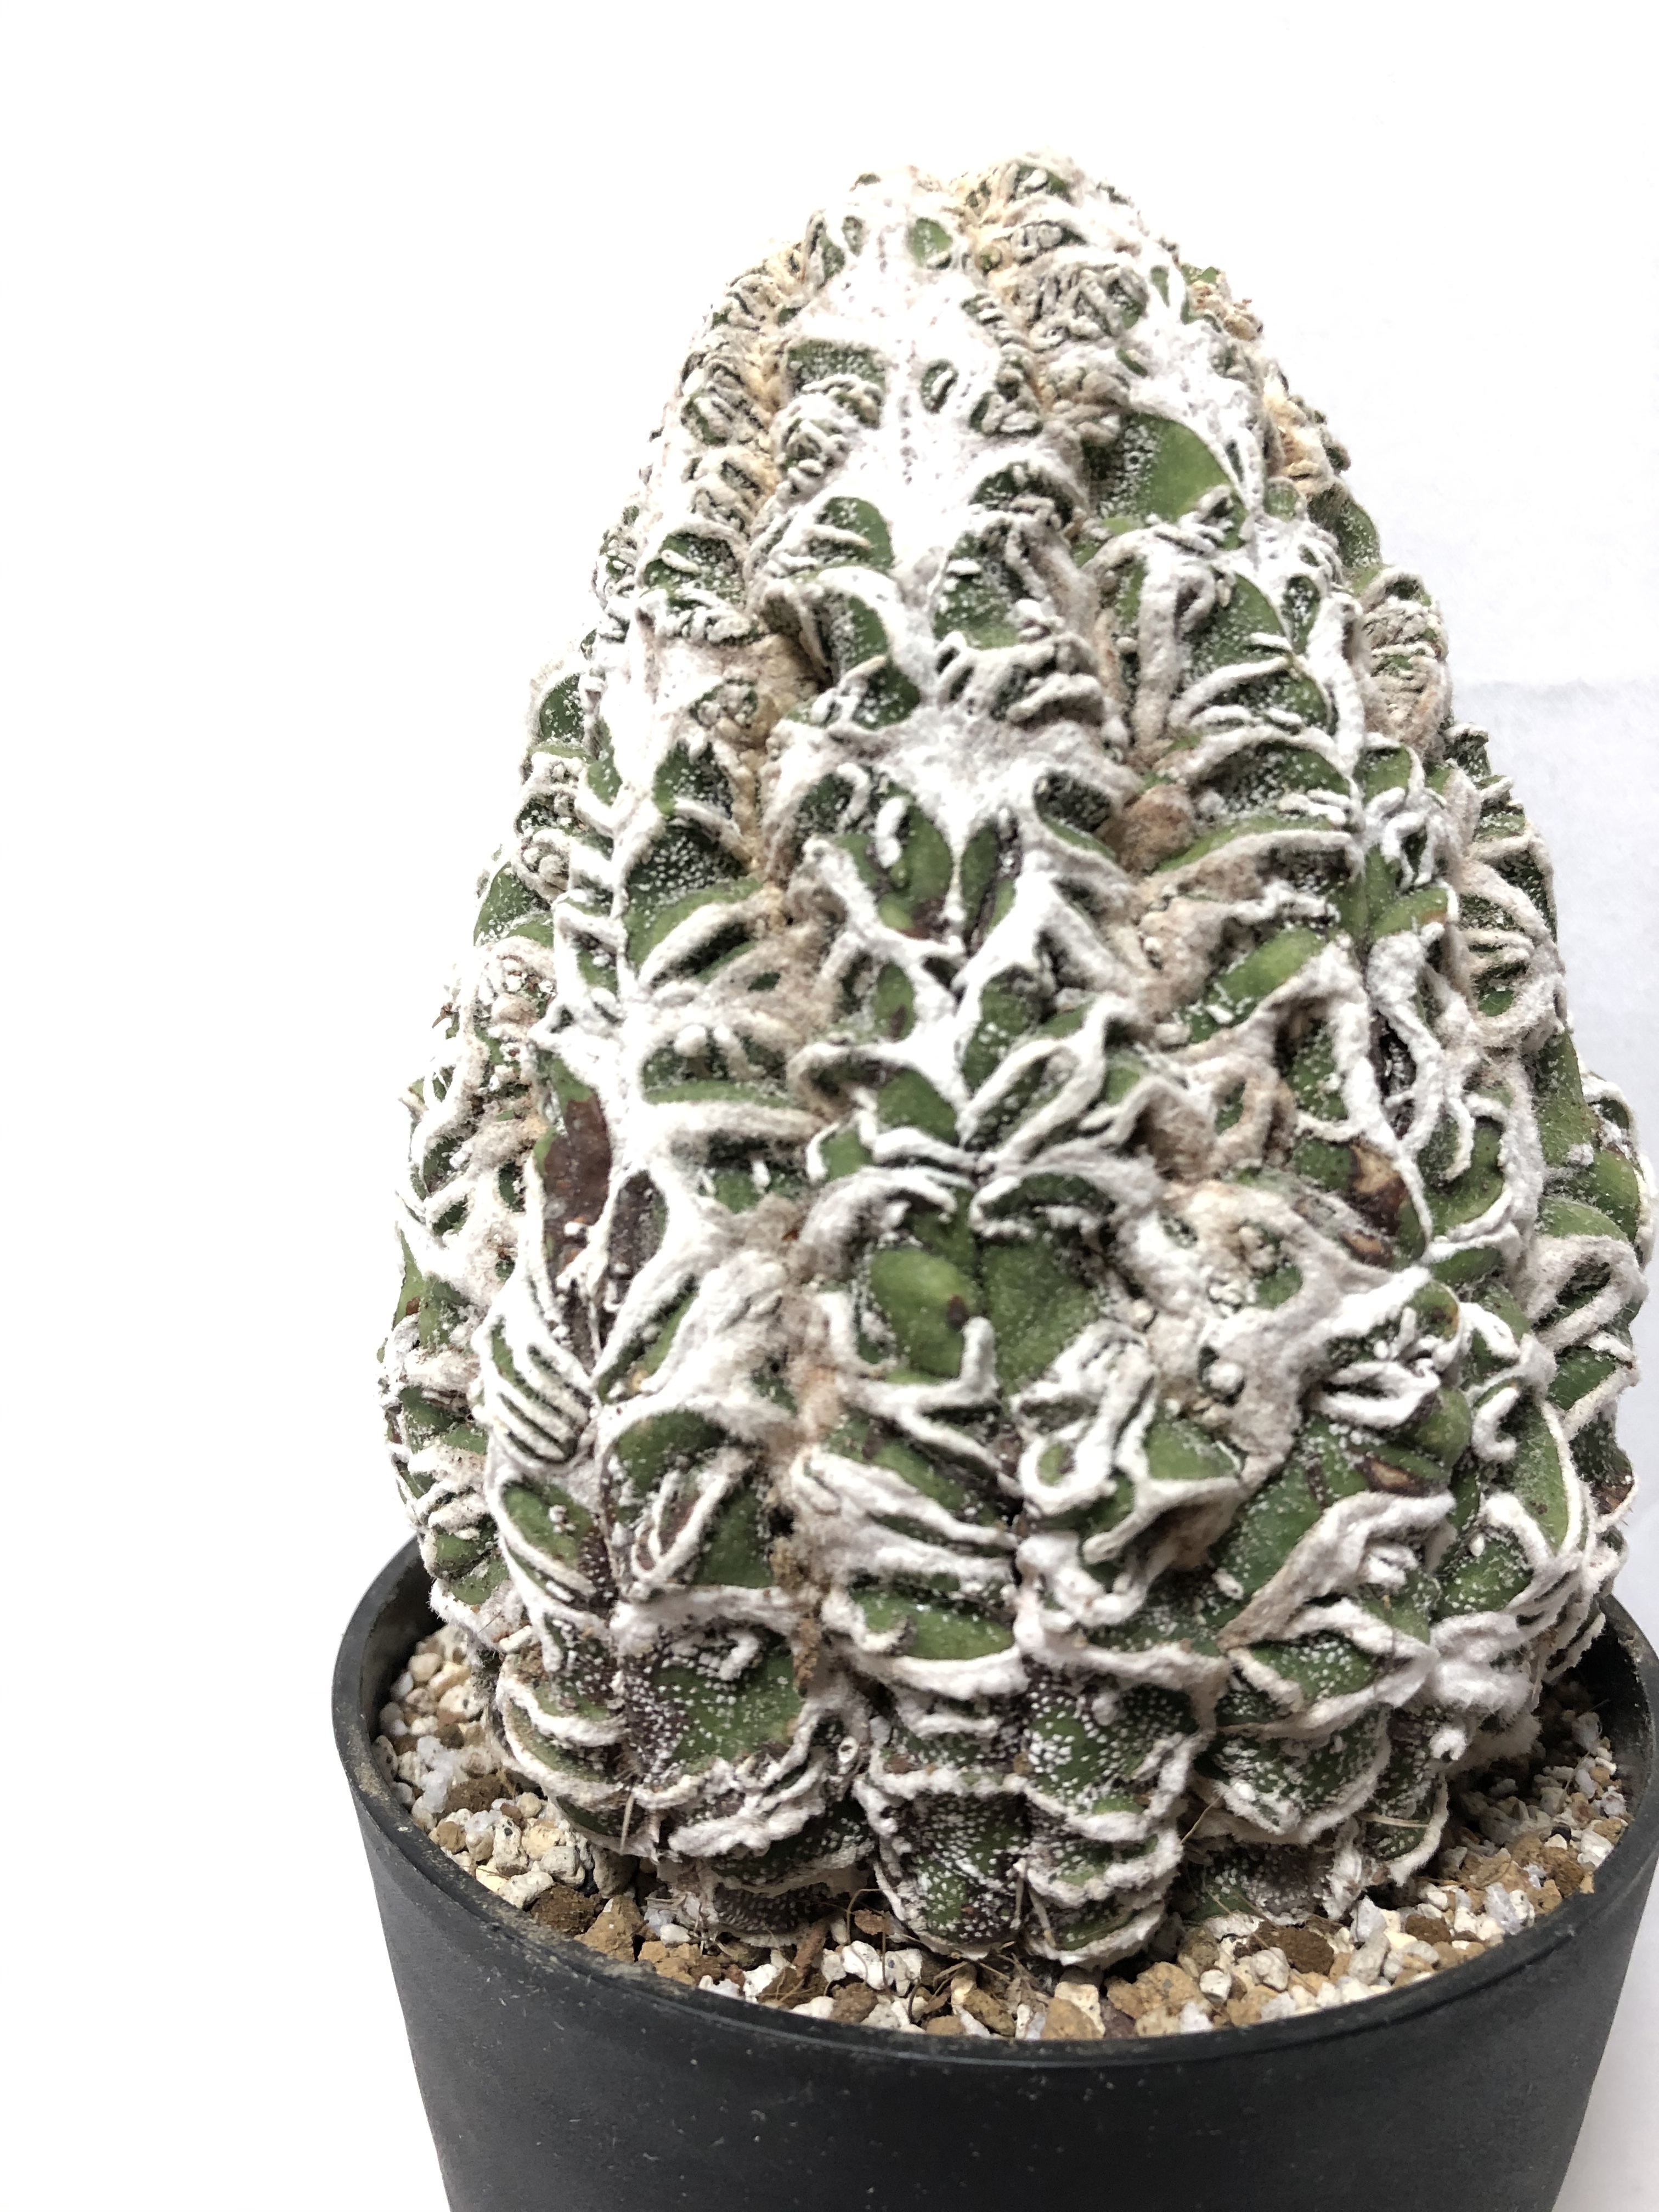 Astrophytum Sp アストロフィツム 複隆盤石 Plants Maru ー 多肉植物 サボテン 園芸グッズのお店 ー